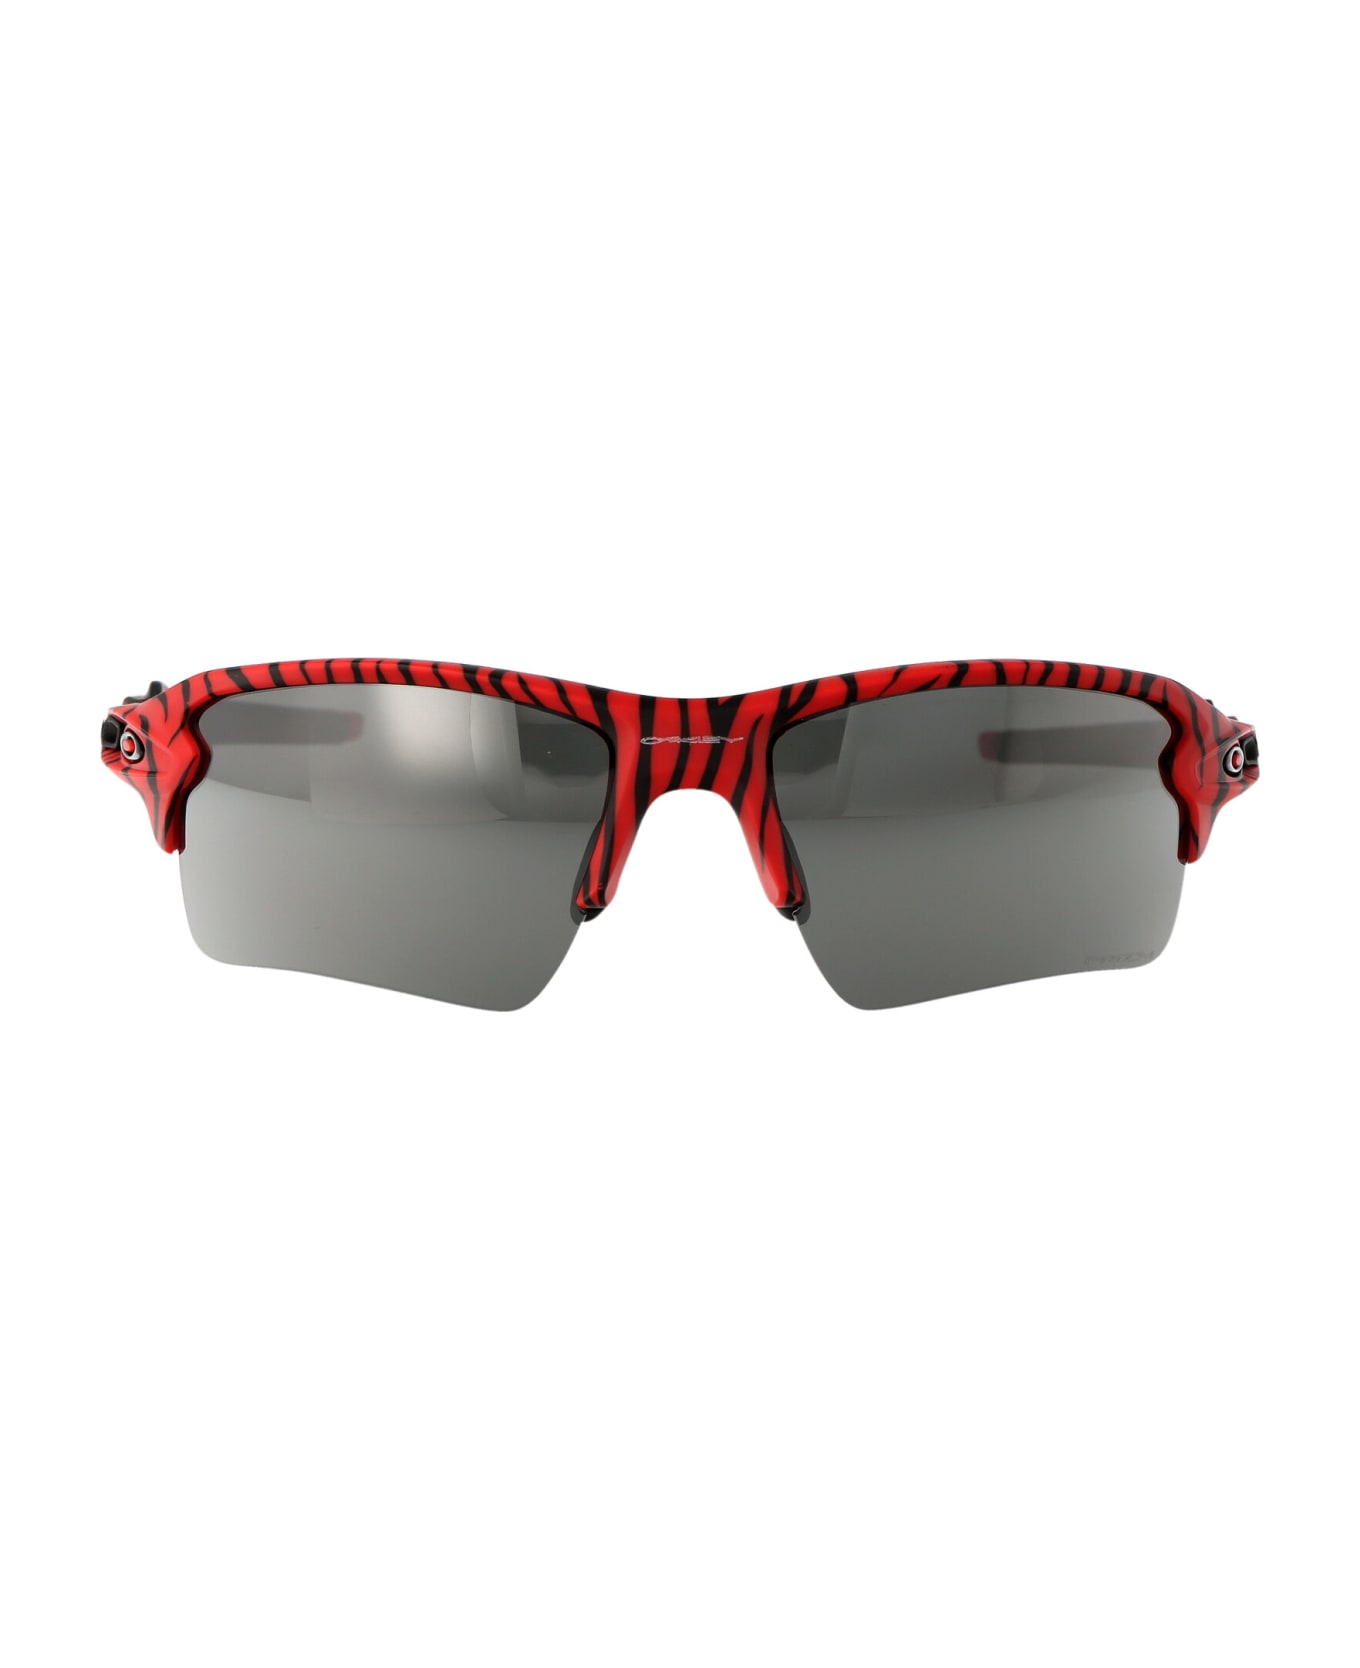 Oakley Flak 2.0 Xl Sunglasses - Red サングラス